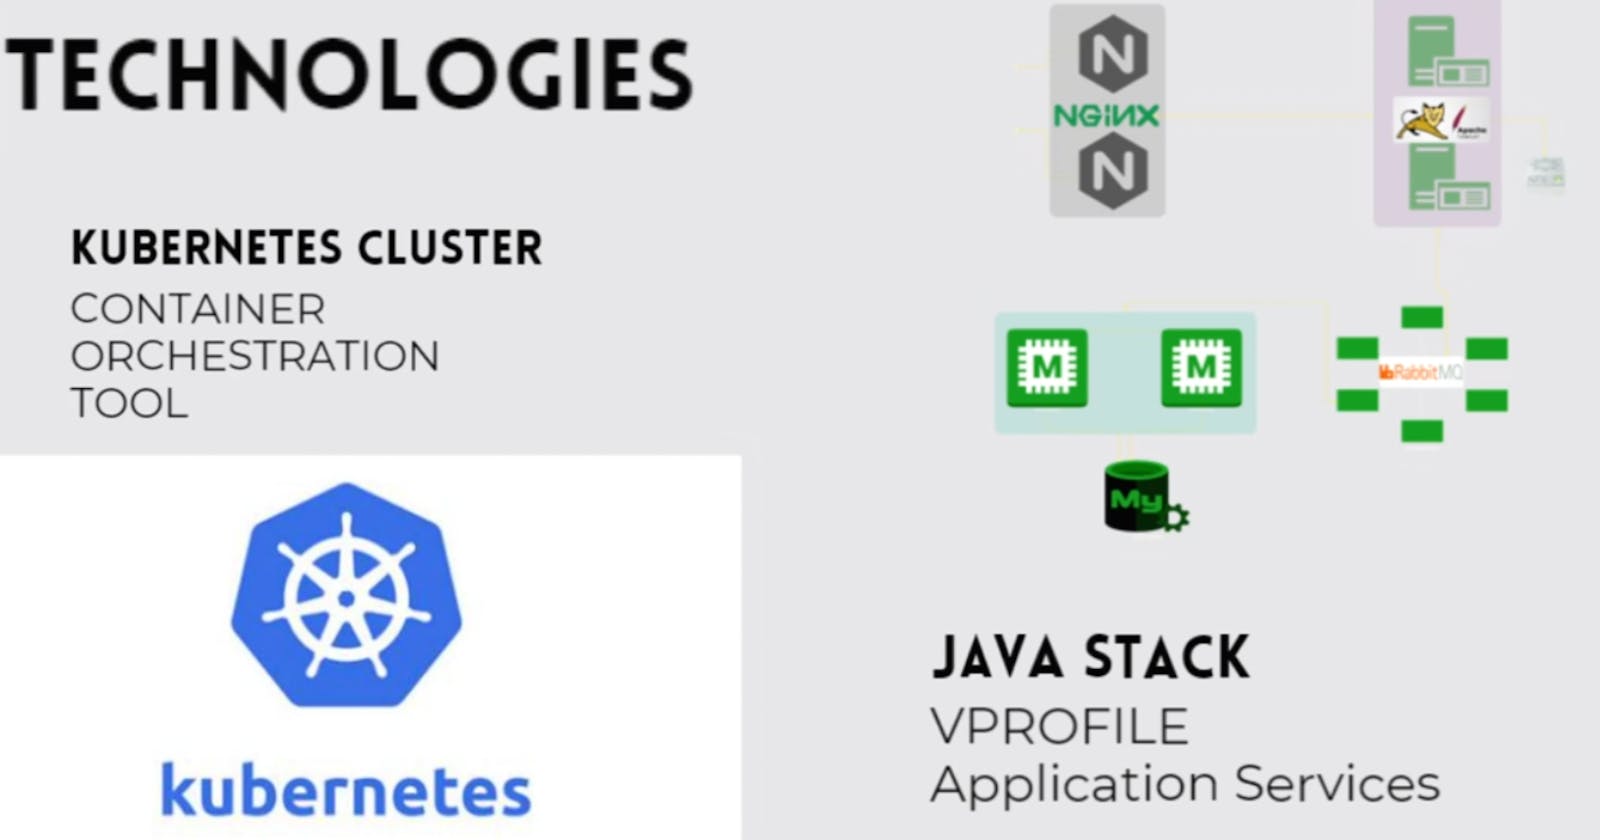 PROJECT: Java App Deployment on Kubernetes Cluster